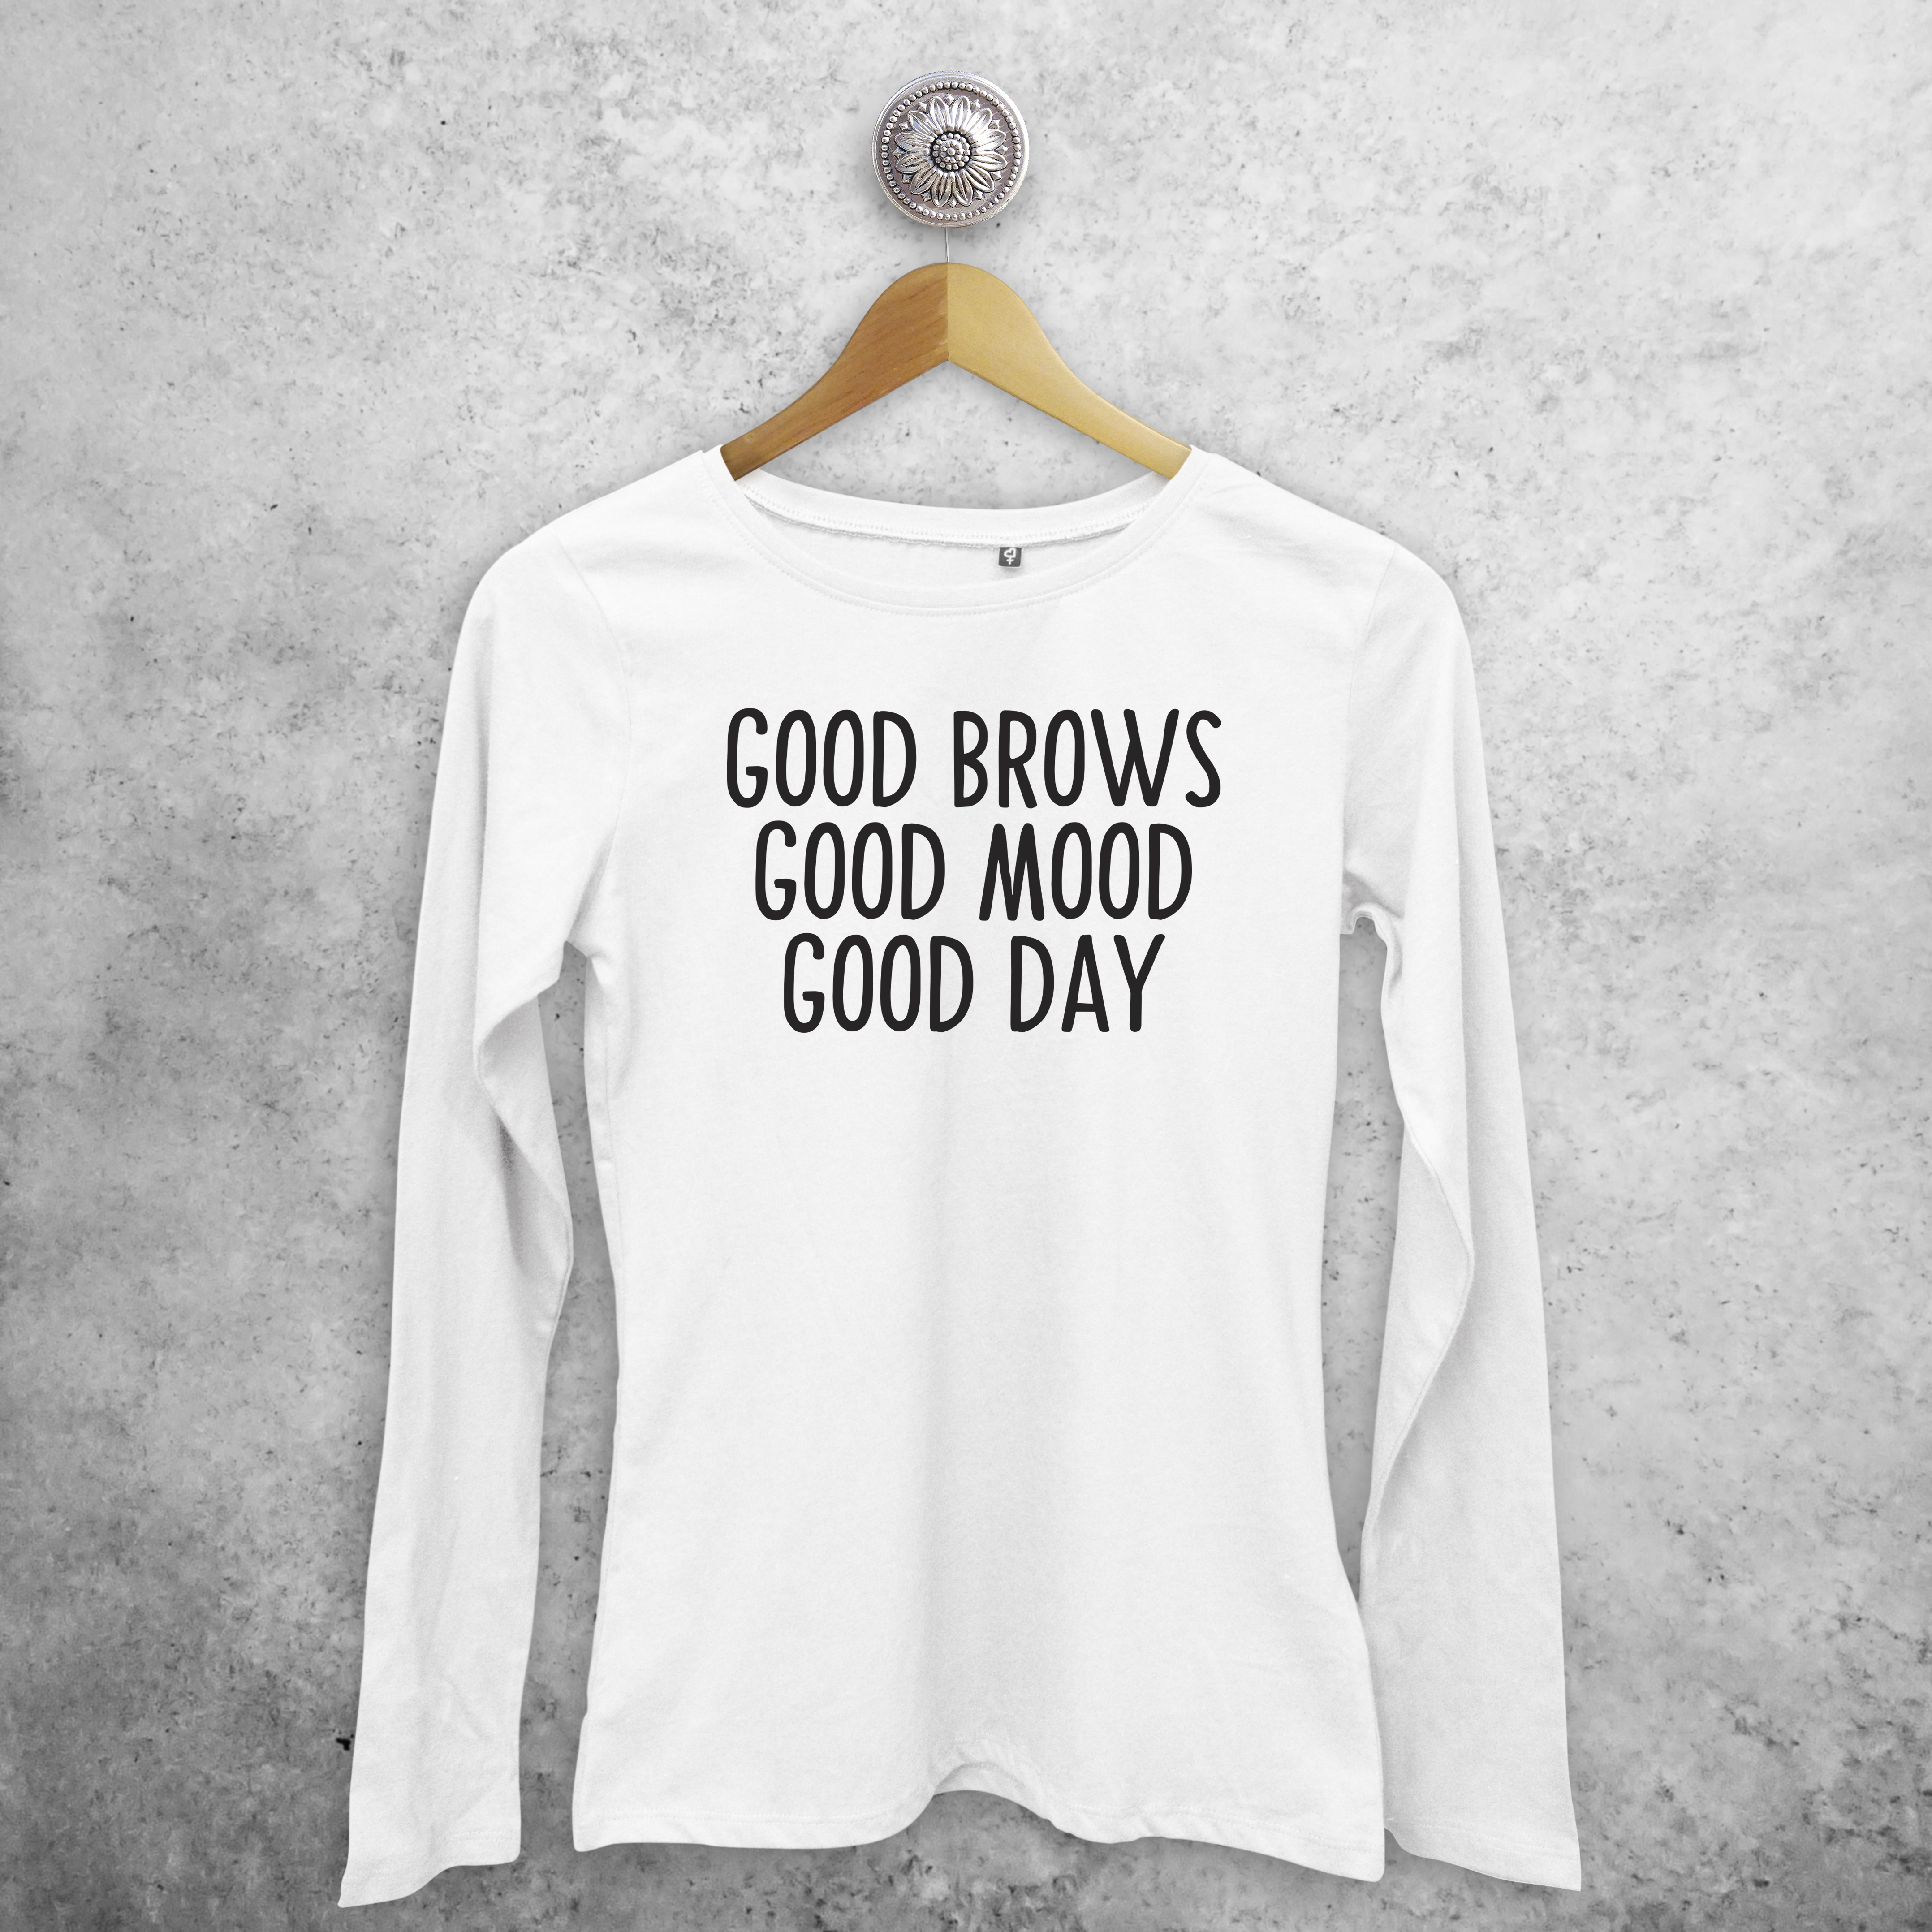 'Good brows, Good mood, Good day' adult longsleeve shirt